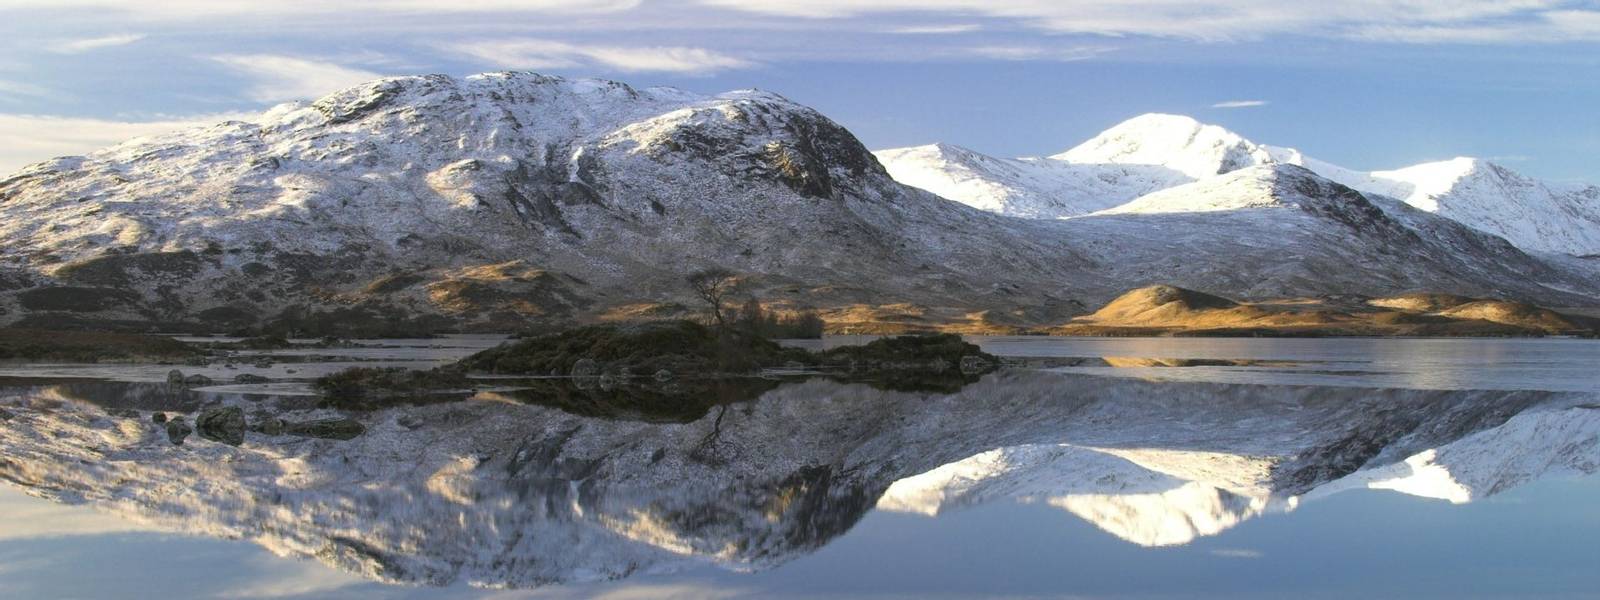 Scottish Highlands - Winter - AdobeStock_1515661.jpeg